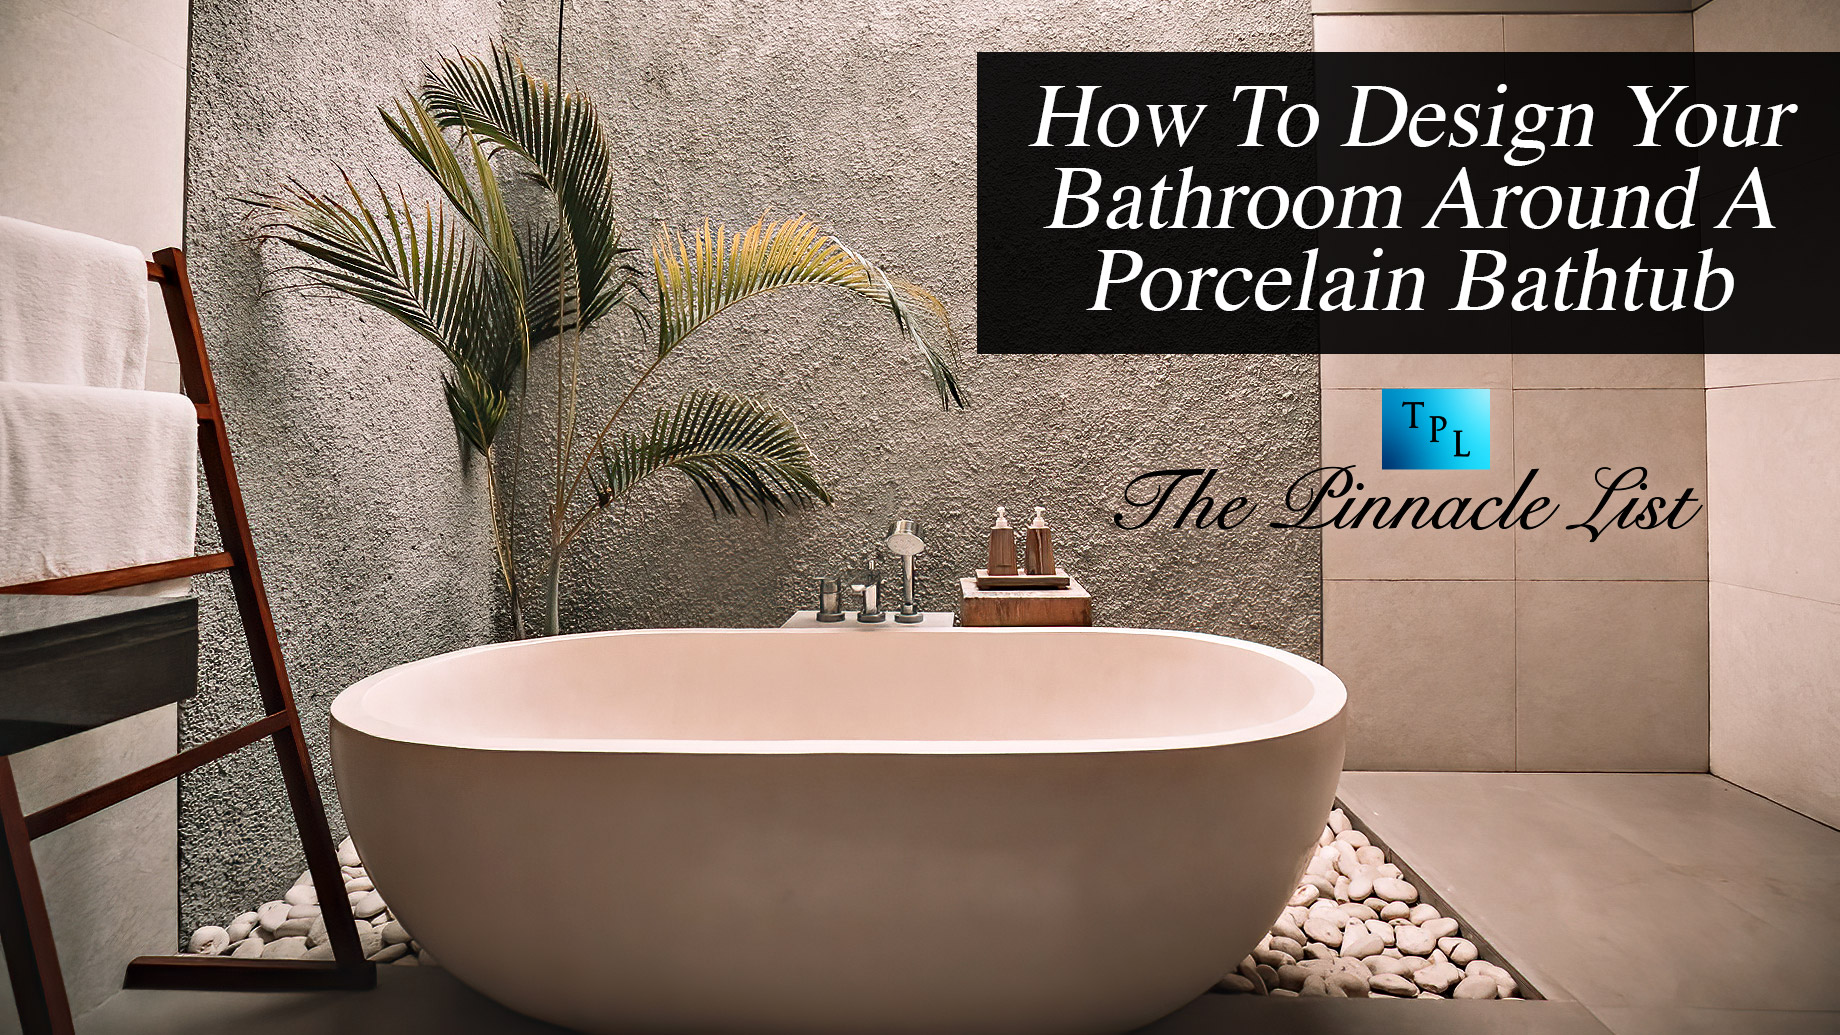 How To Design Your Bathroom Around A Porcelain Bathtub